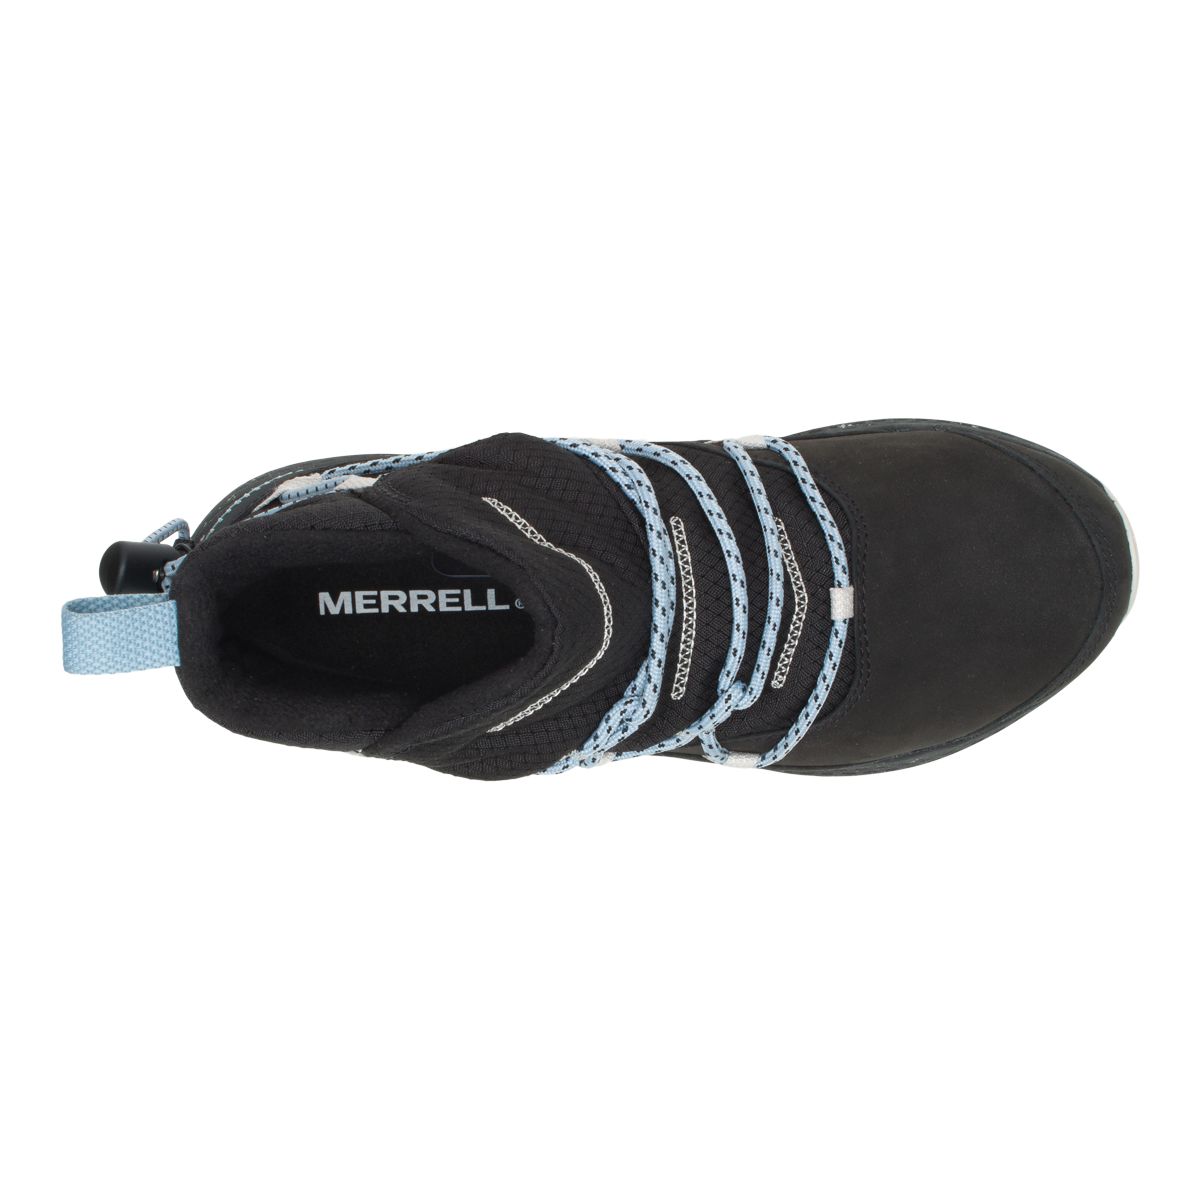 Buy MERRELL 11 Black/White Bravada 2 Waterproof online in British